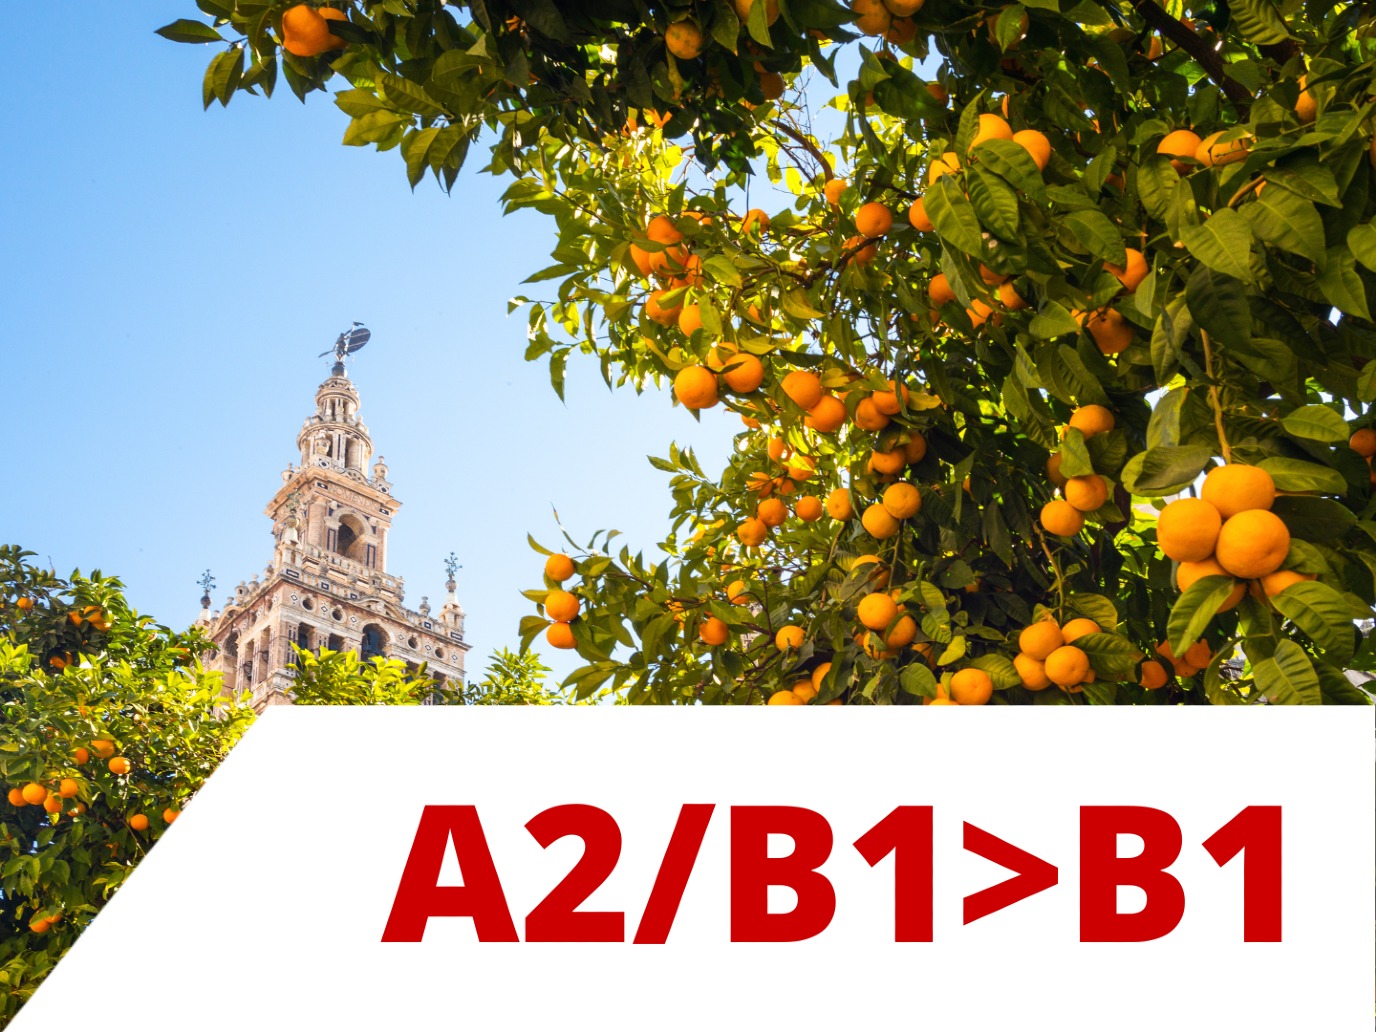 Spaans A2/B1>B1